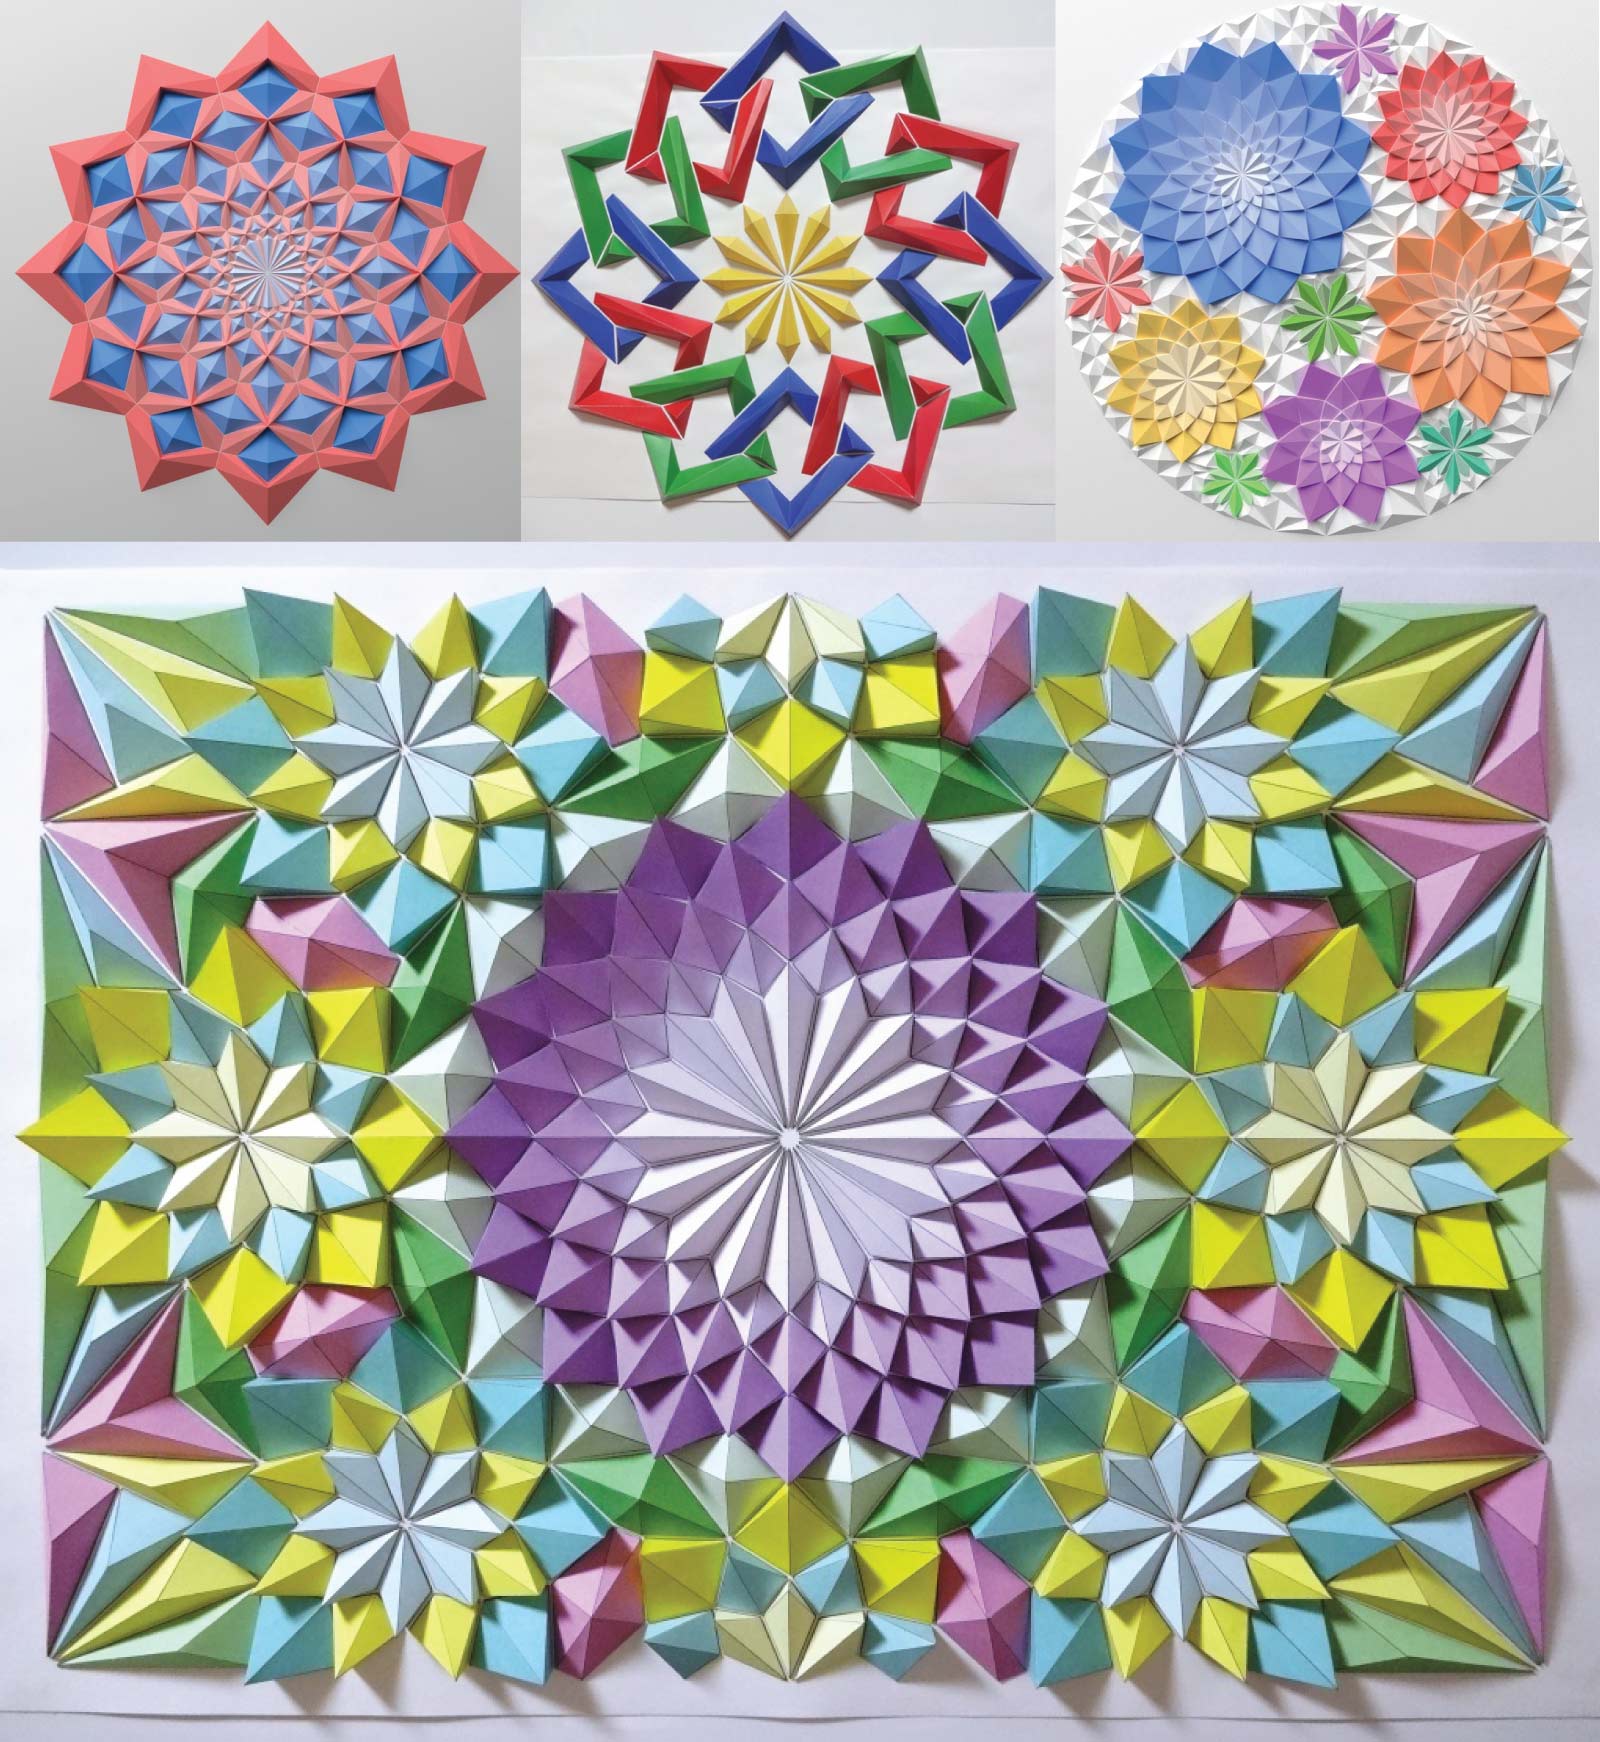 The Origami Mosaics of Kota Hiratsuka